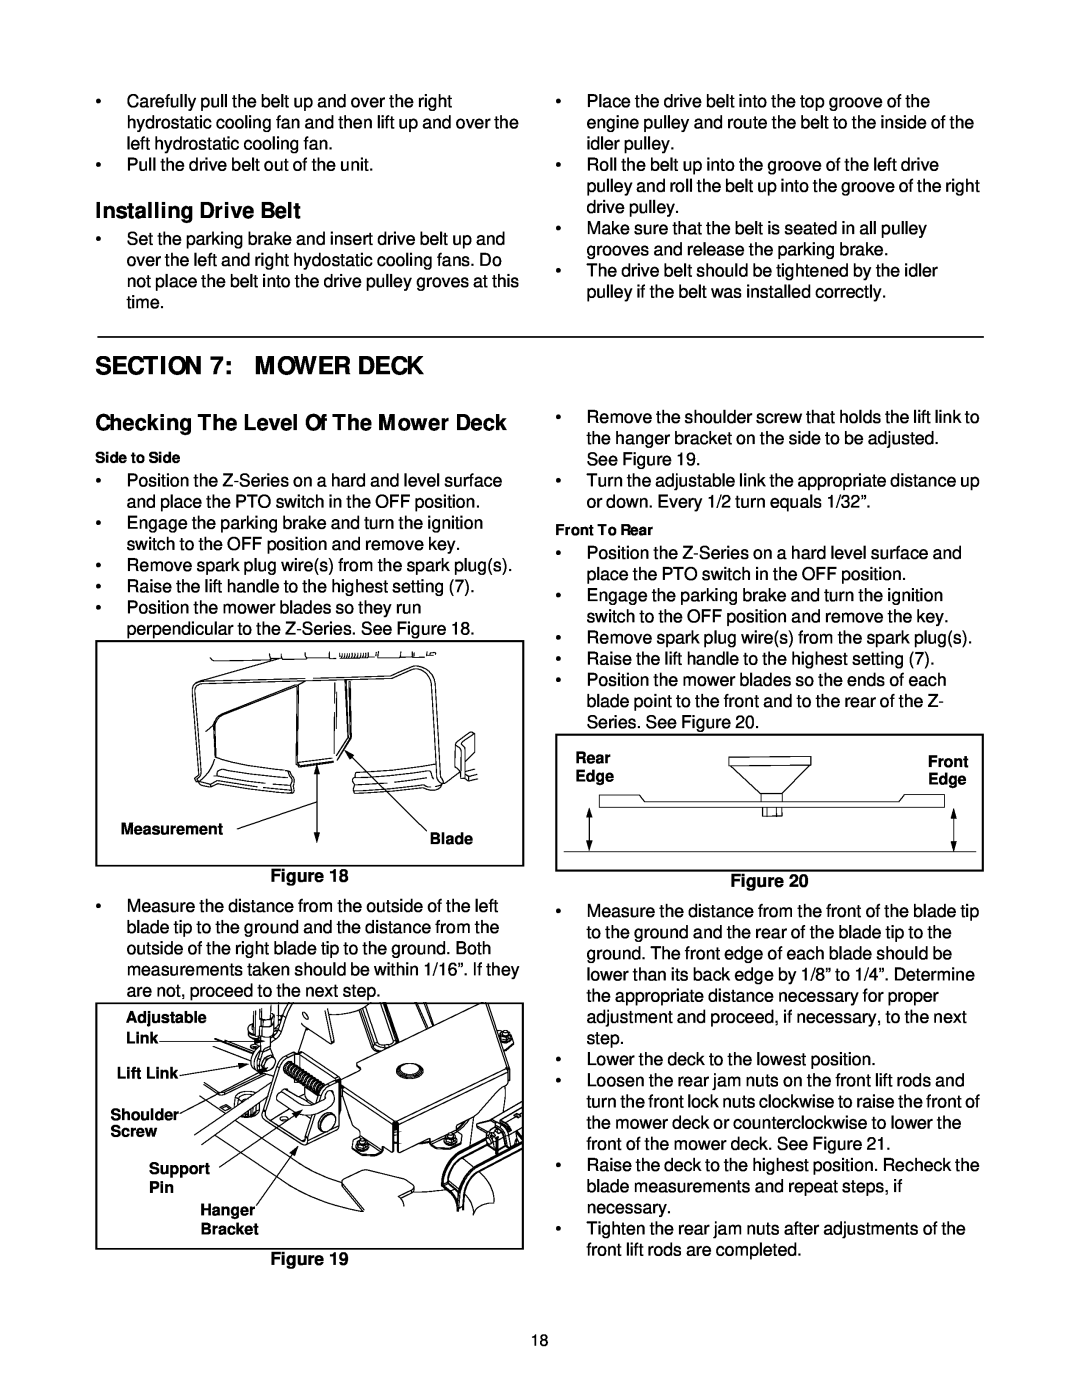 White Outdoor ZT-1850, ZT-2150, ZT-2250 manual Mower Deck, Installing Drive Belt, Side to Side, Front To Rear, Figure 